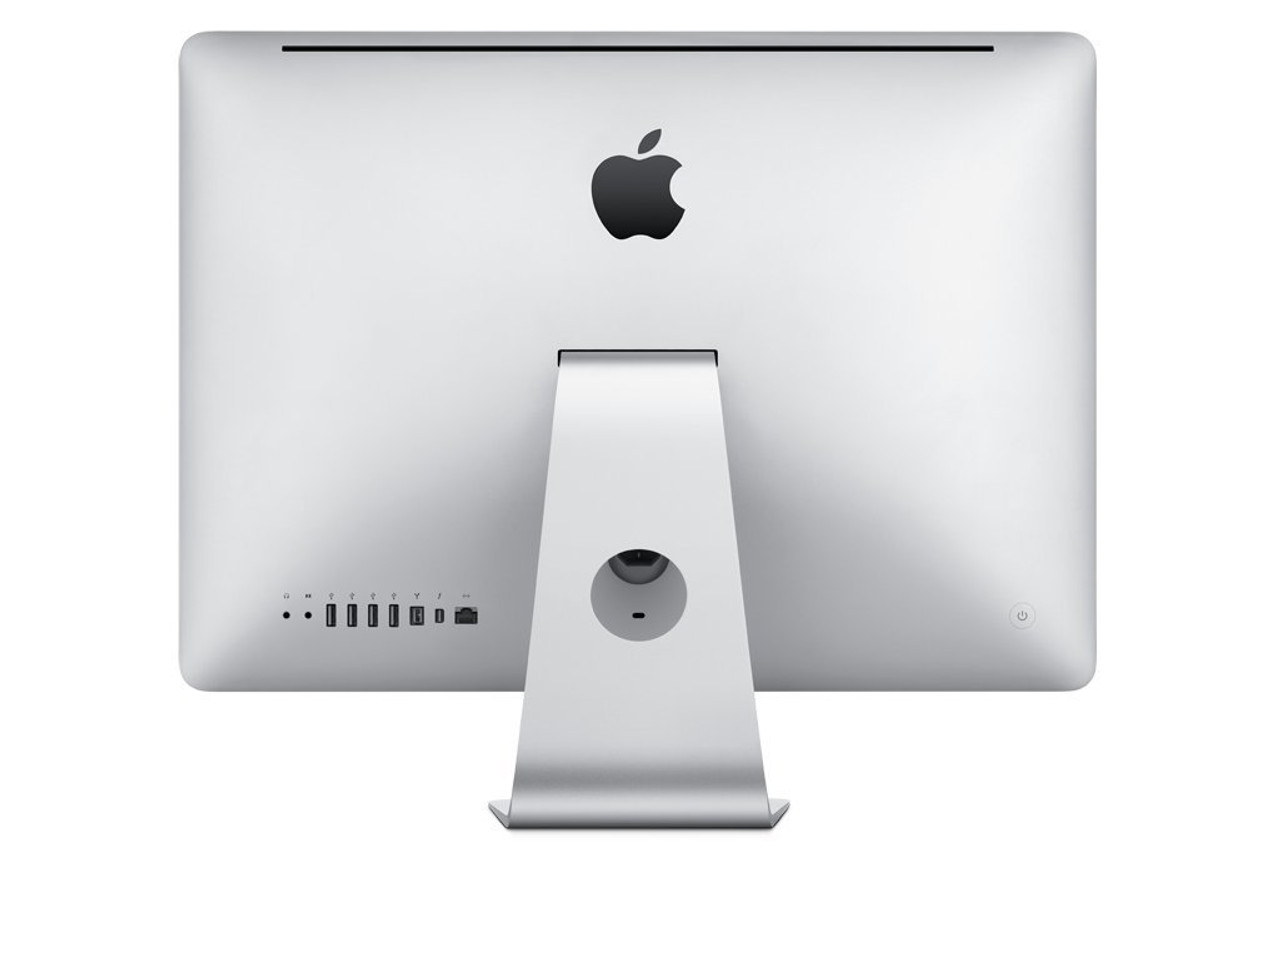 iMac 21.5-inch Mid 2011